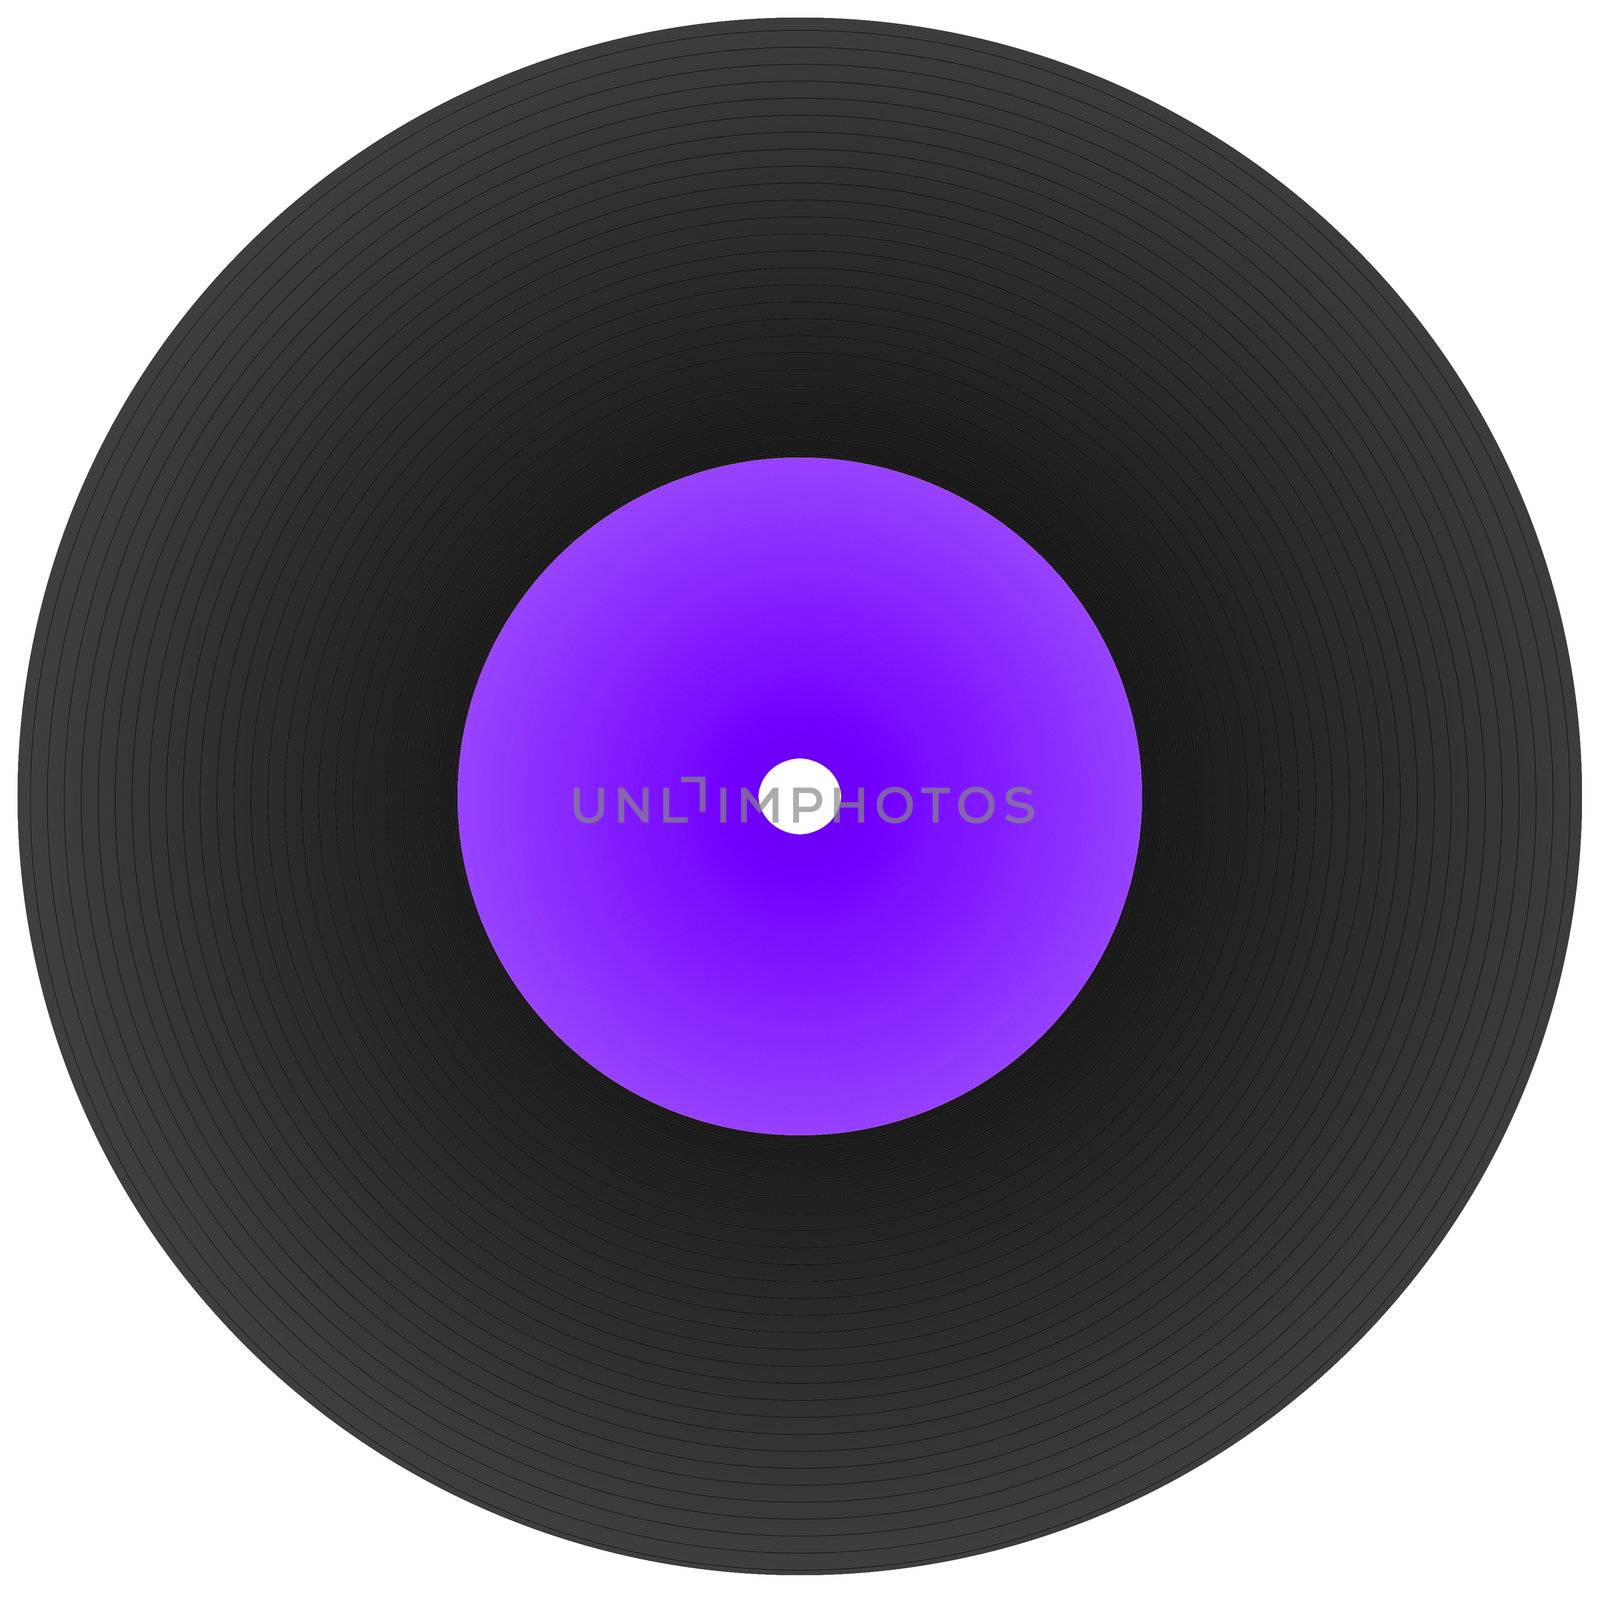 vinyl disc record by gunnar3000